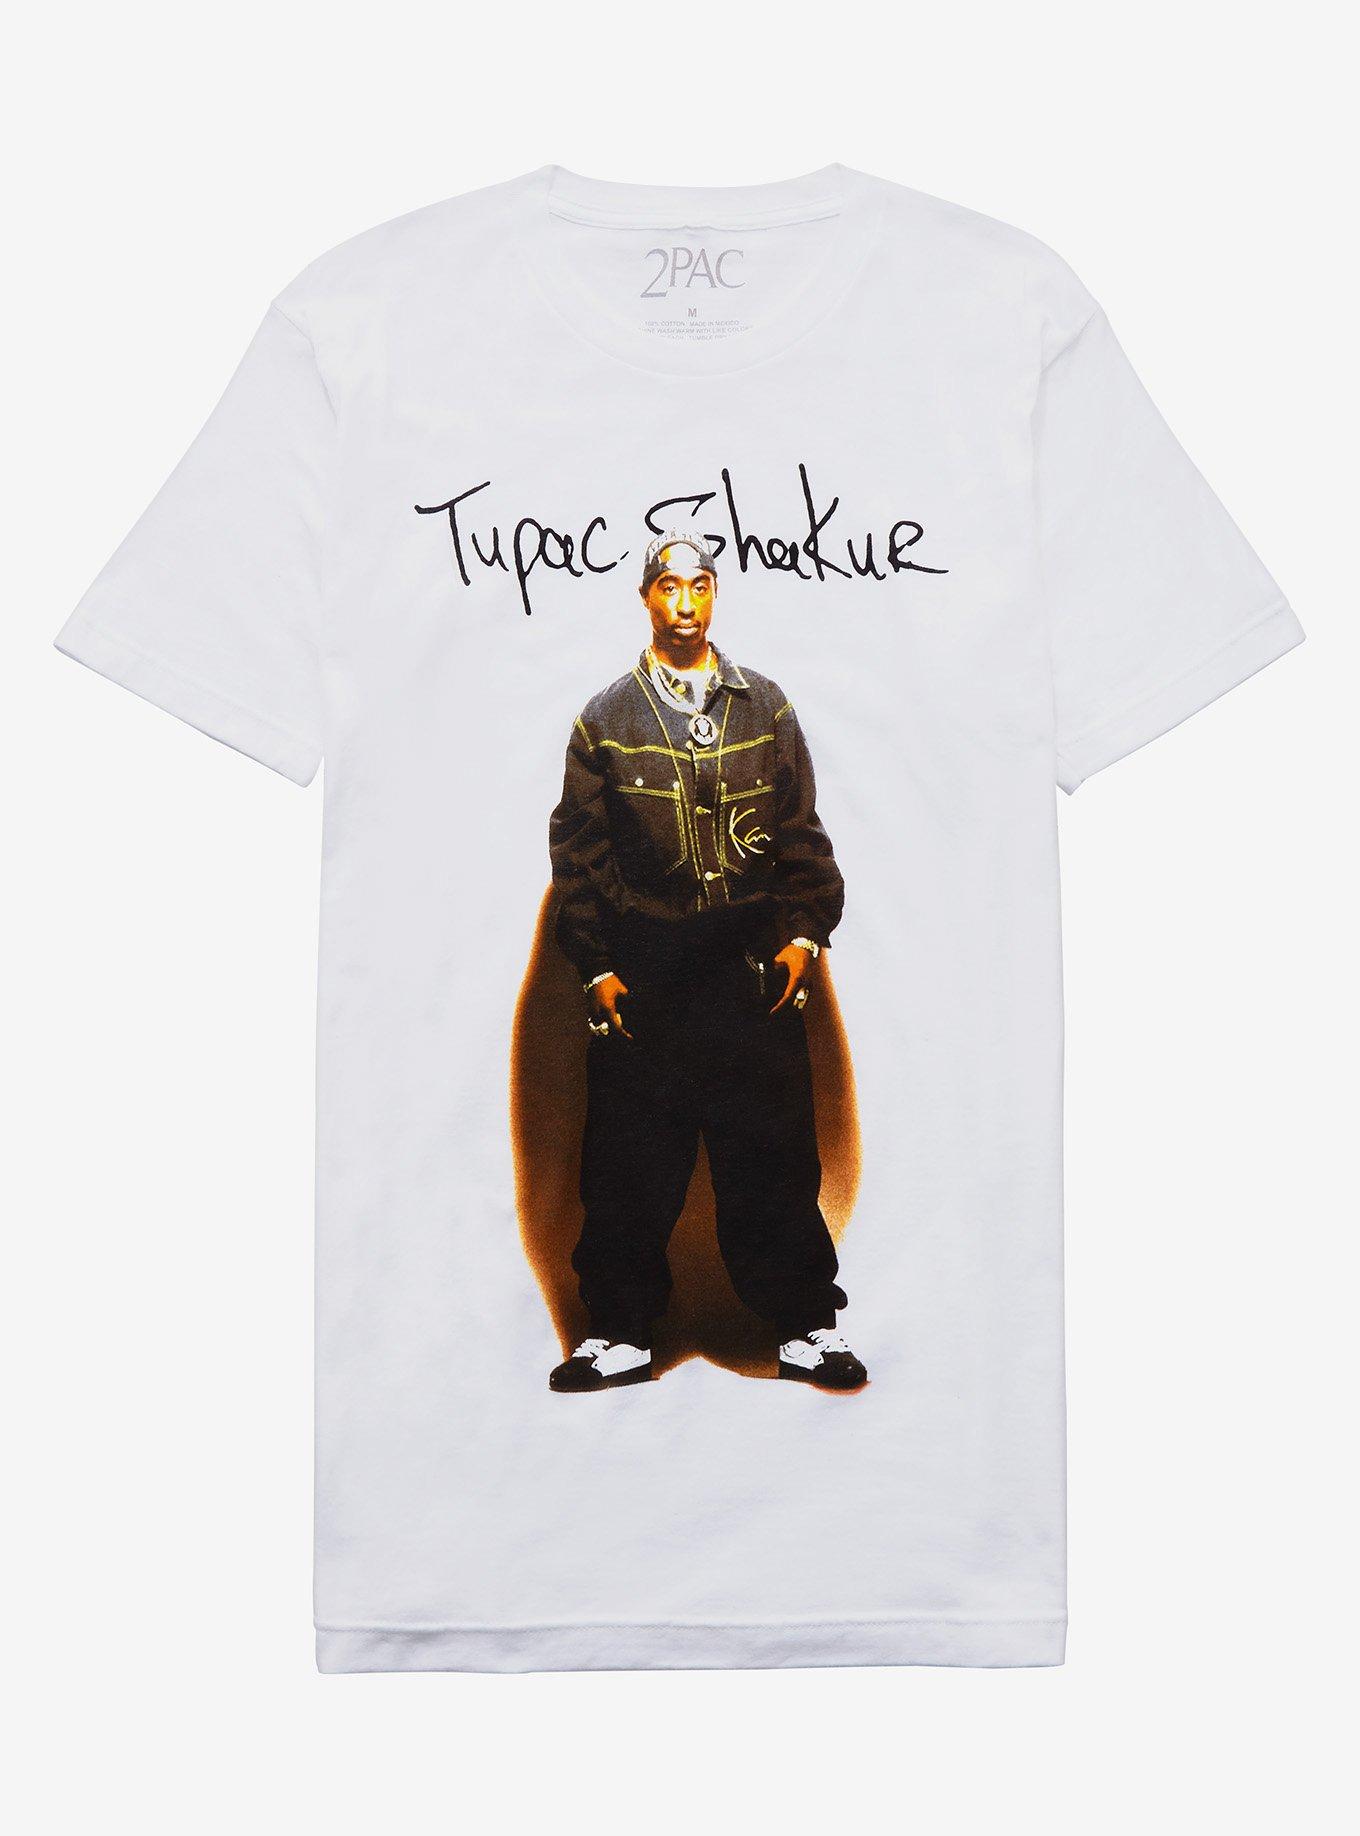 Tupac Shakur 2pac Poetic Justice Hip Hop Lime Green Shirt